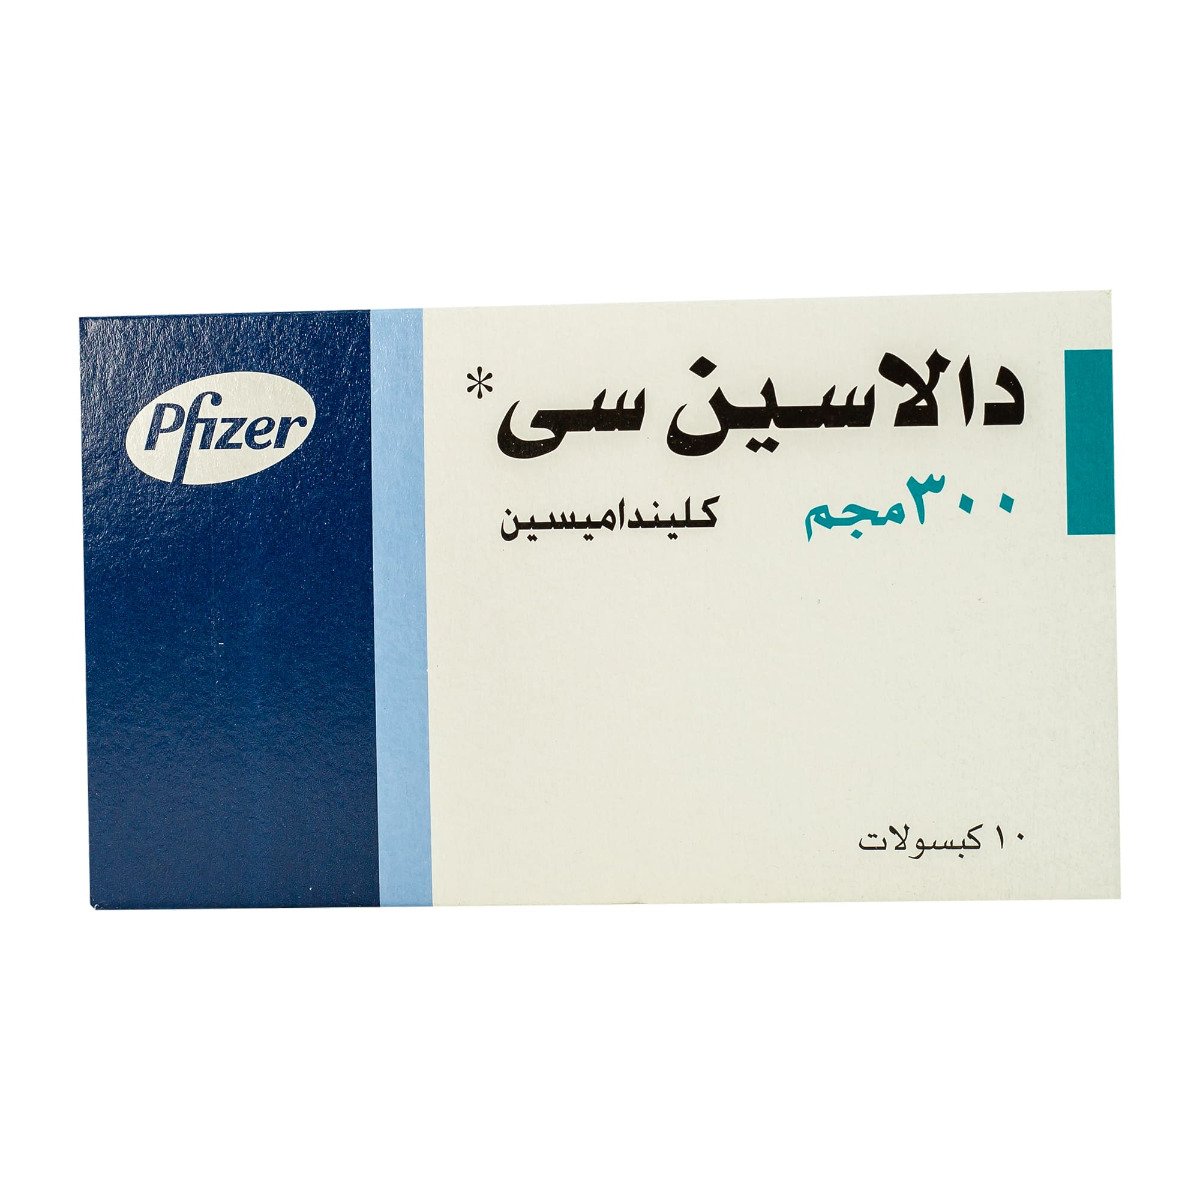 Dalacin C 300 mg - 10 Capsules - Bloom Pharmacy